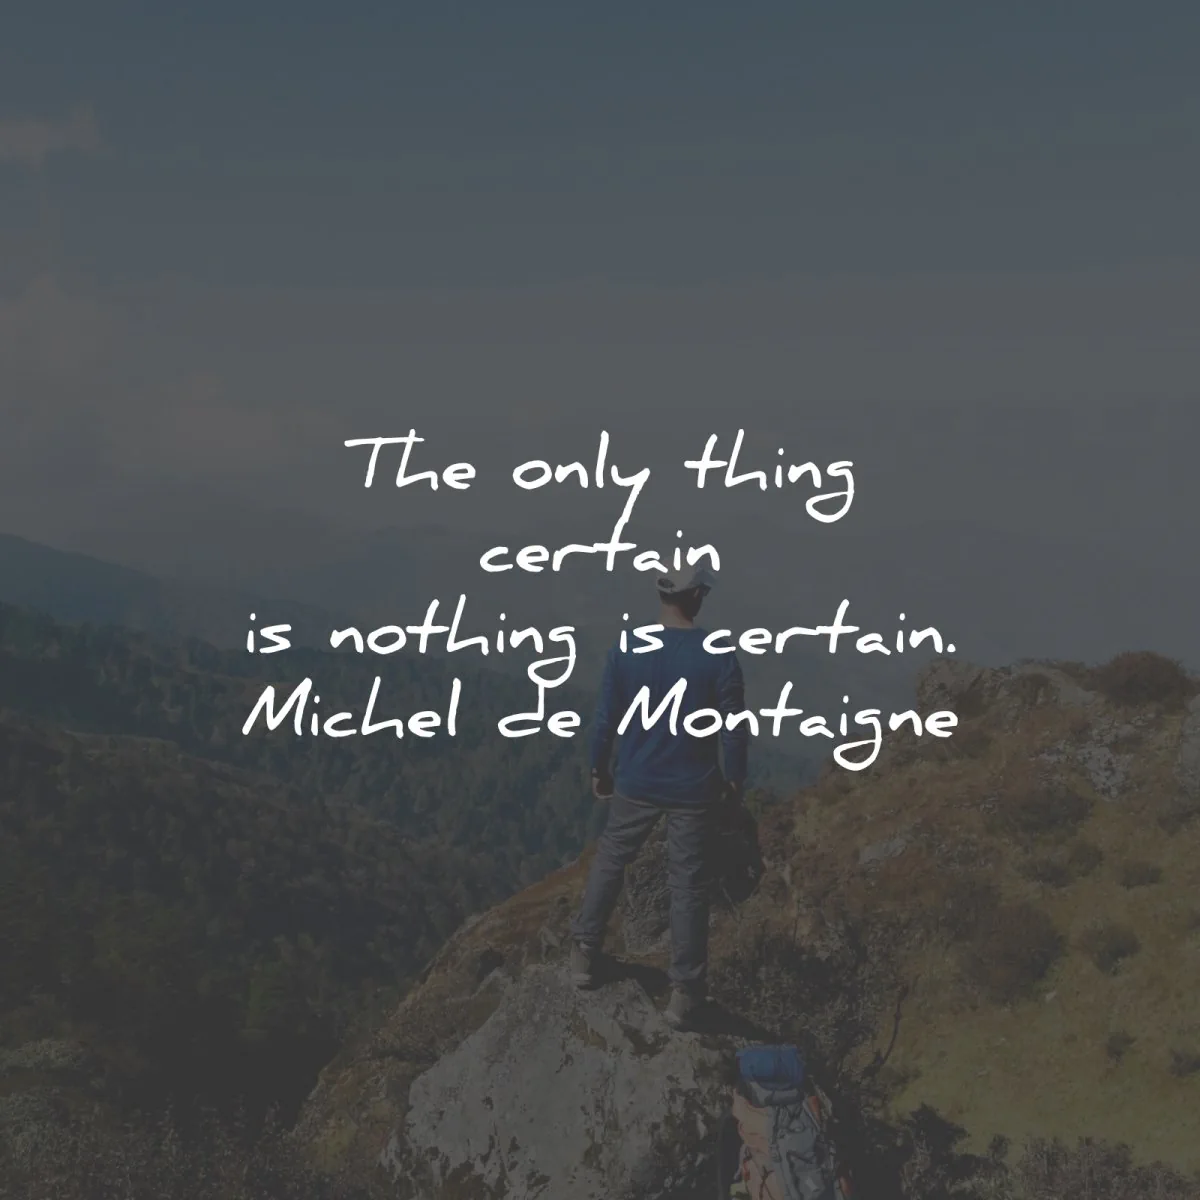 michel de montaigne quotes only thing certain wisdom